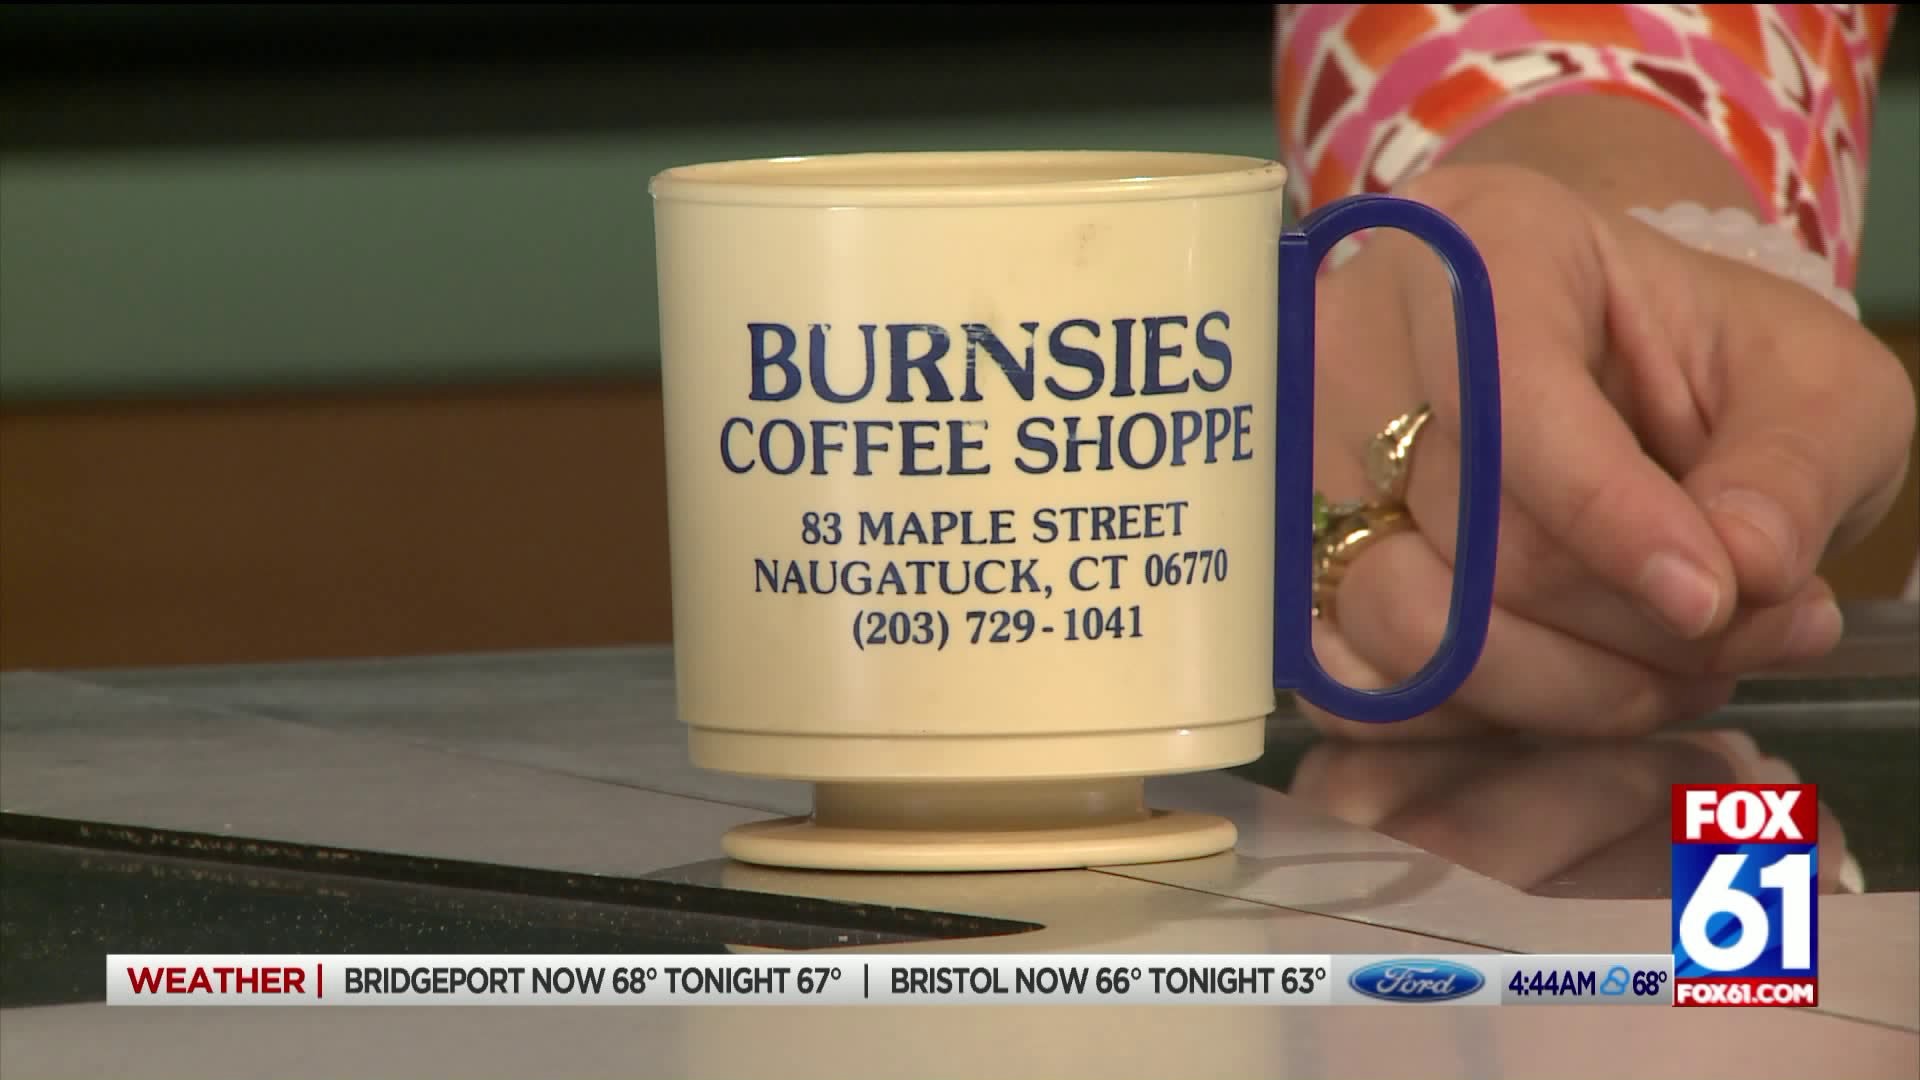 Burnsies Coffee Shoppe